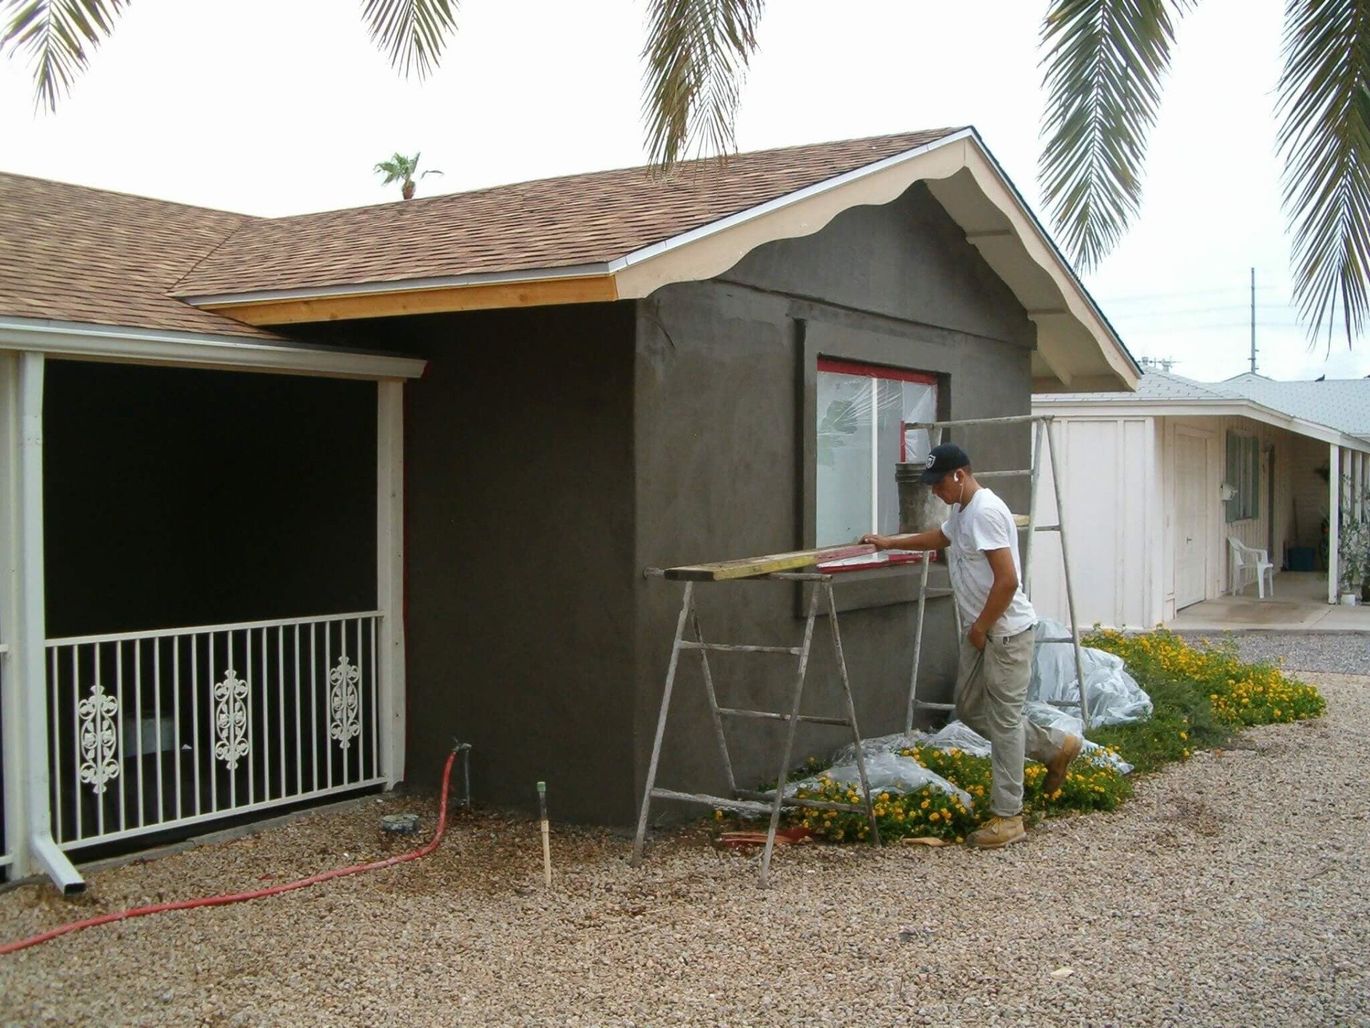 Arizona Stucco exterior remodel & paint Sun City AZ 3 before